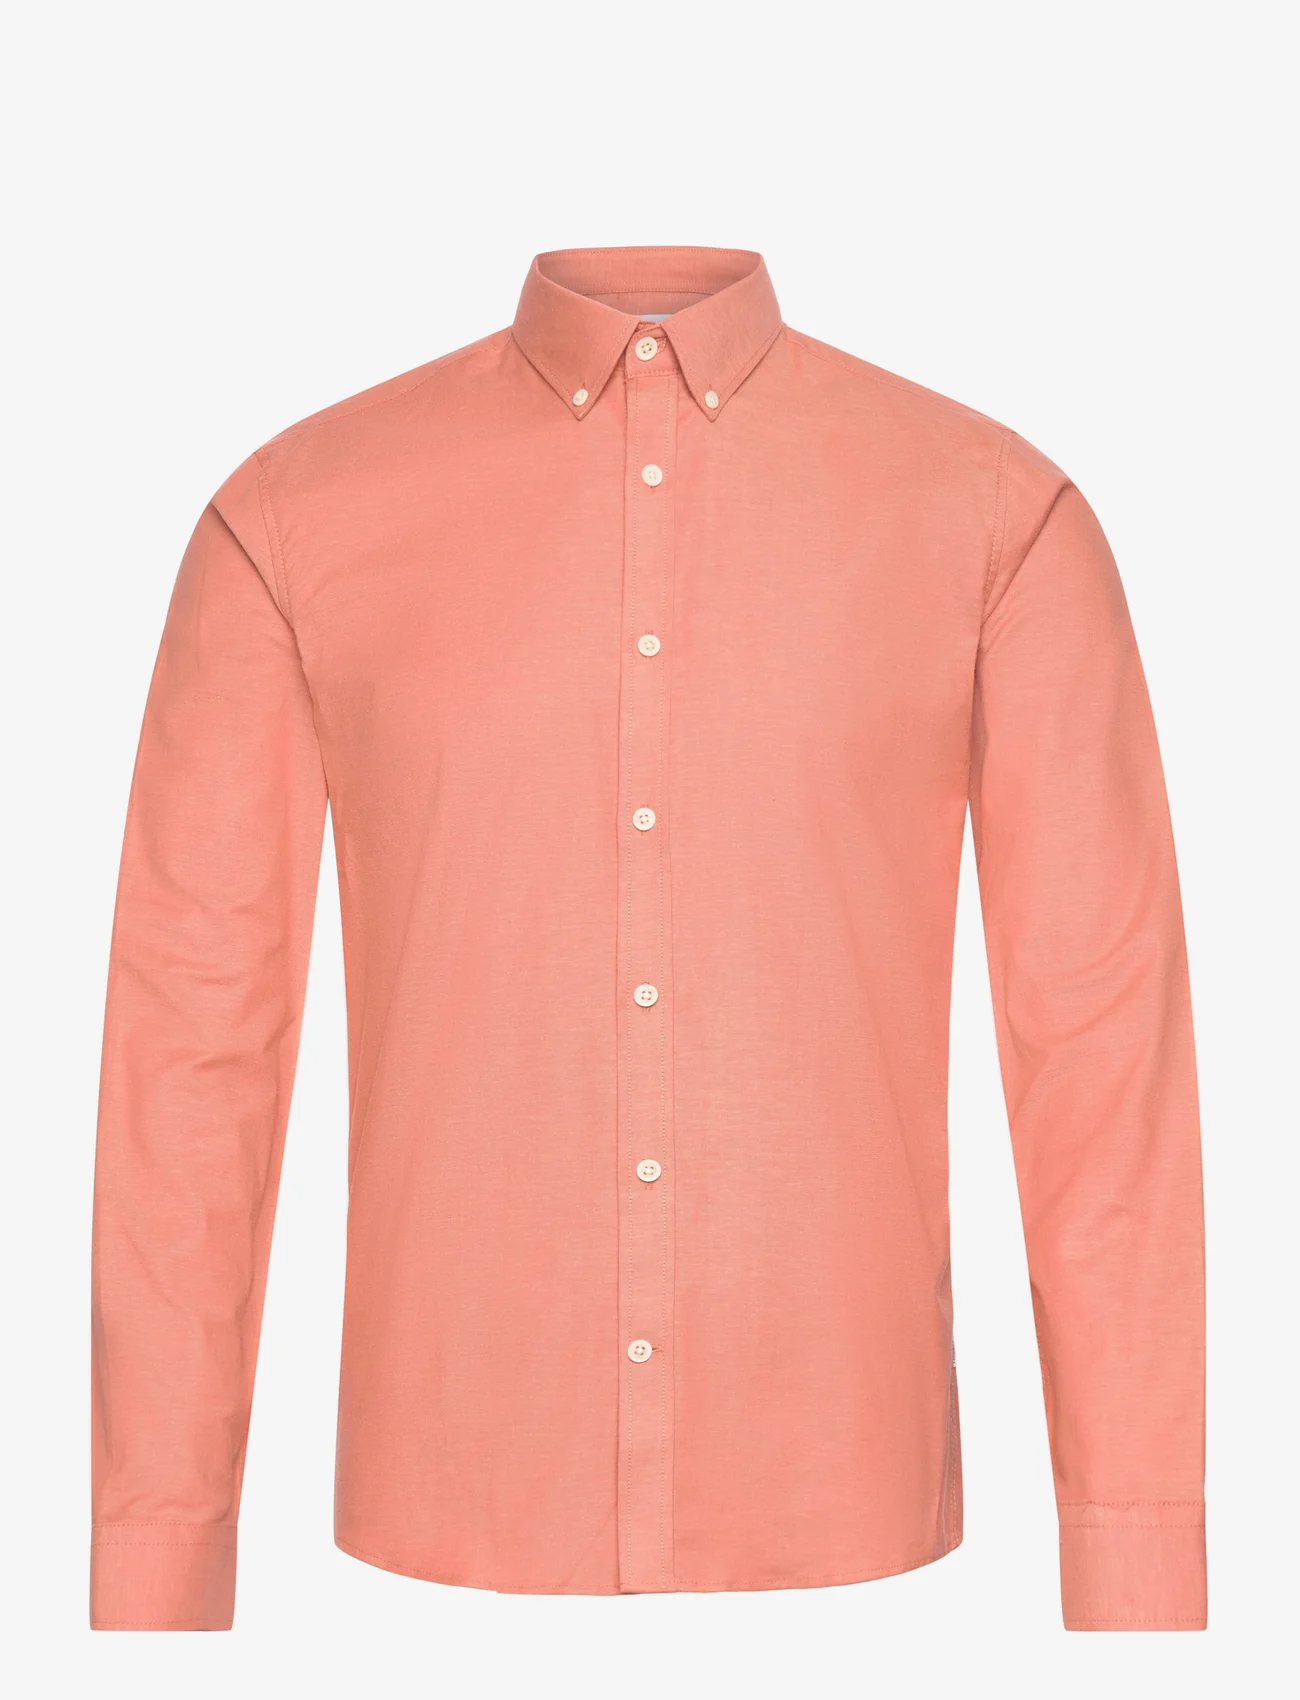 Lindbergh - Oxford superflex shirt L/S - oxford skjorter - coral mix - 0